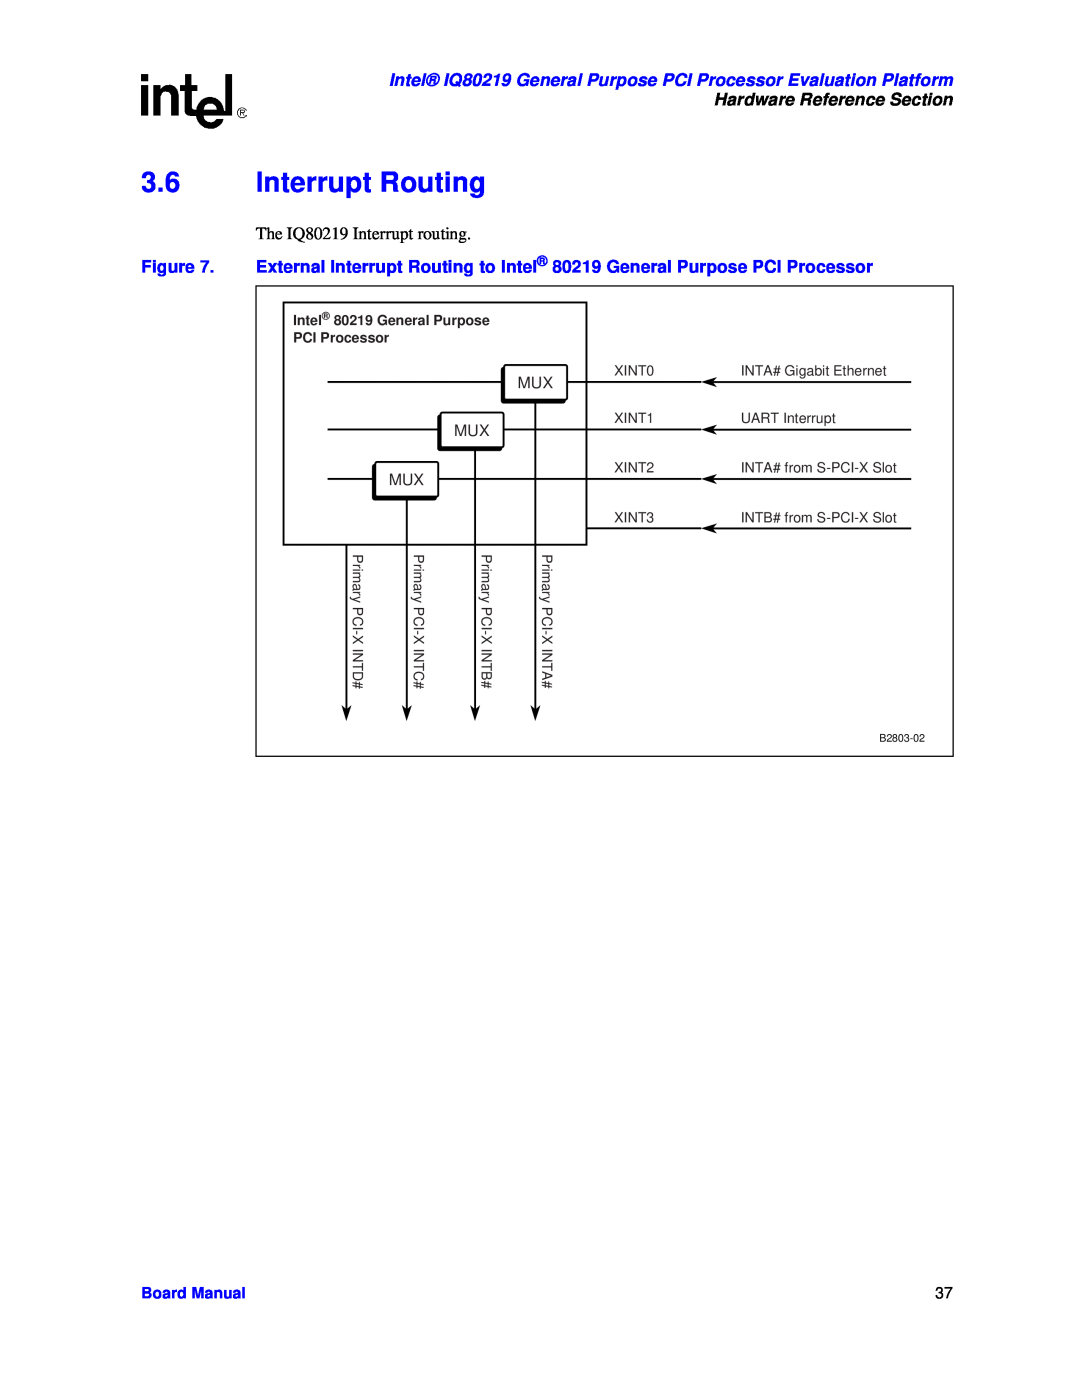 Intel Interrupt Routing, Intel IQ80219 General Purpose PCI Processor Evaluation Platform, Hardware Reference Section 